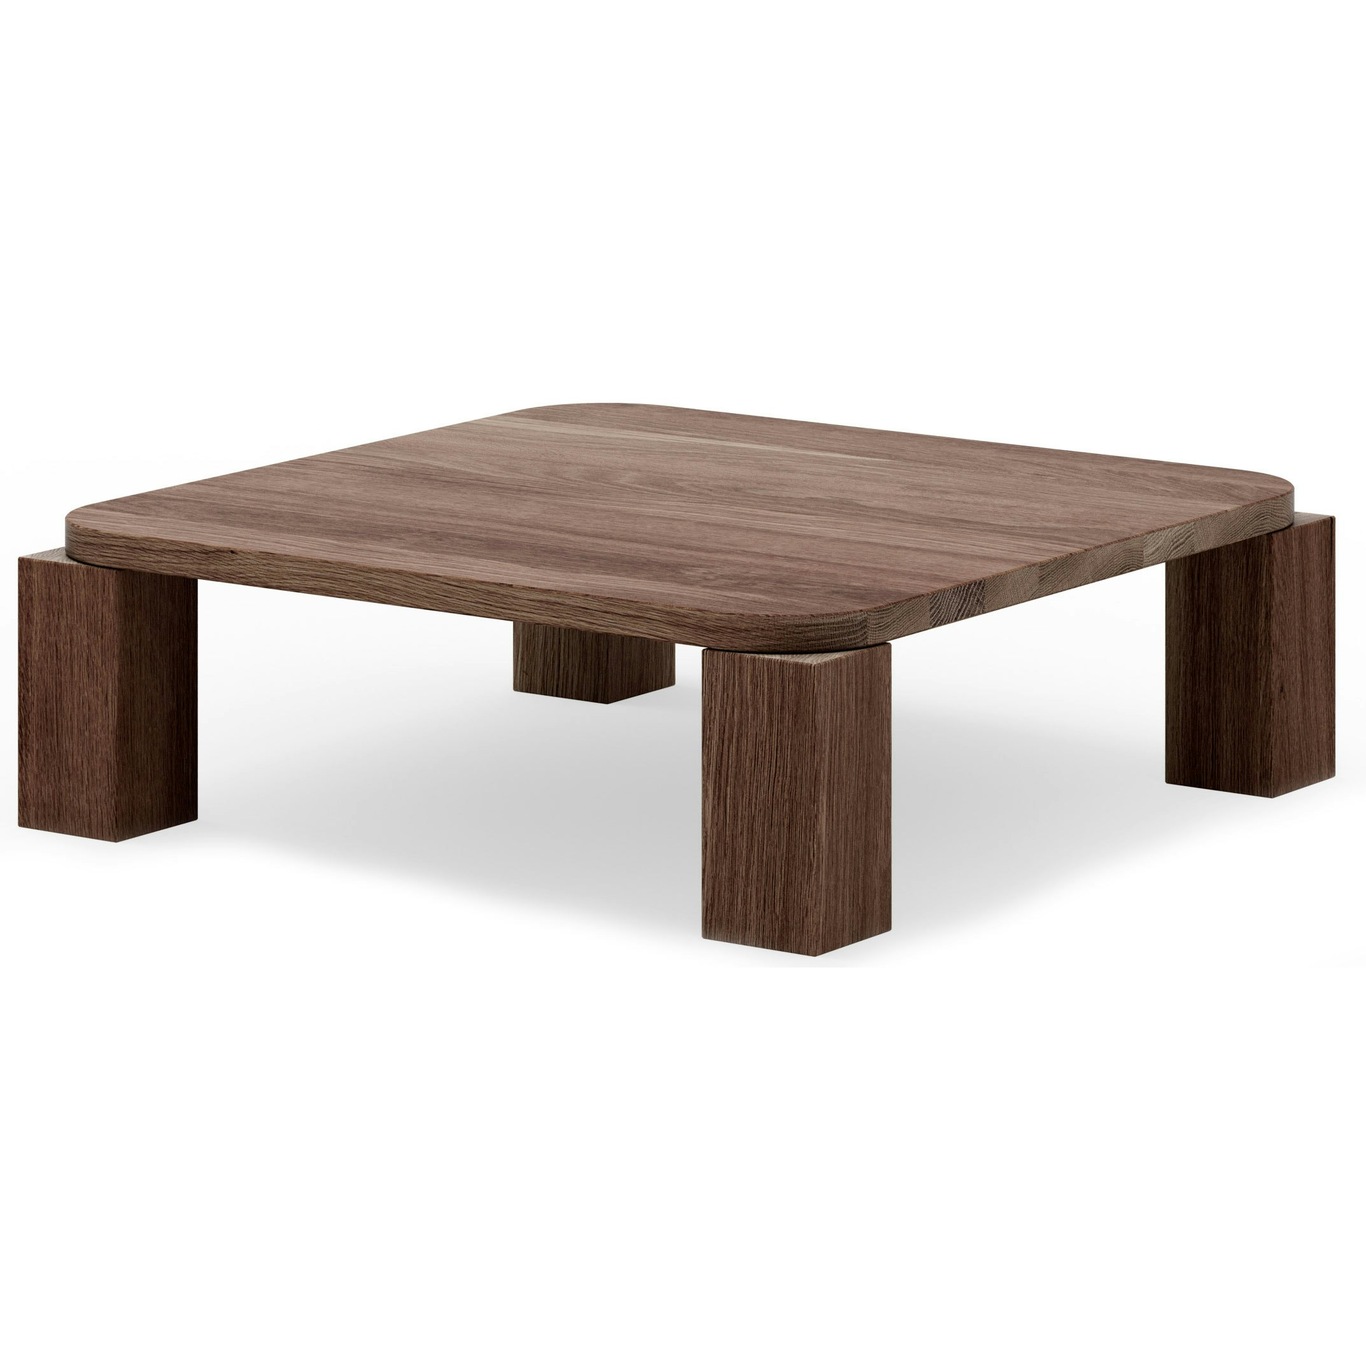 Atlas Coffee Table 82x82 cm, Smoked Oak